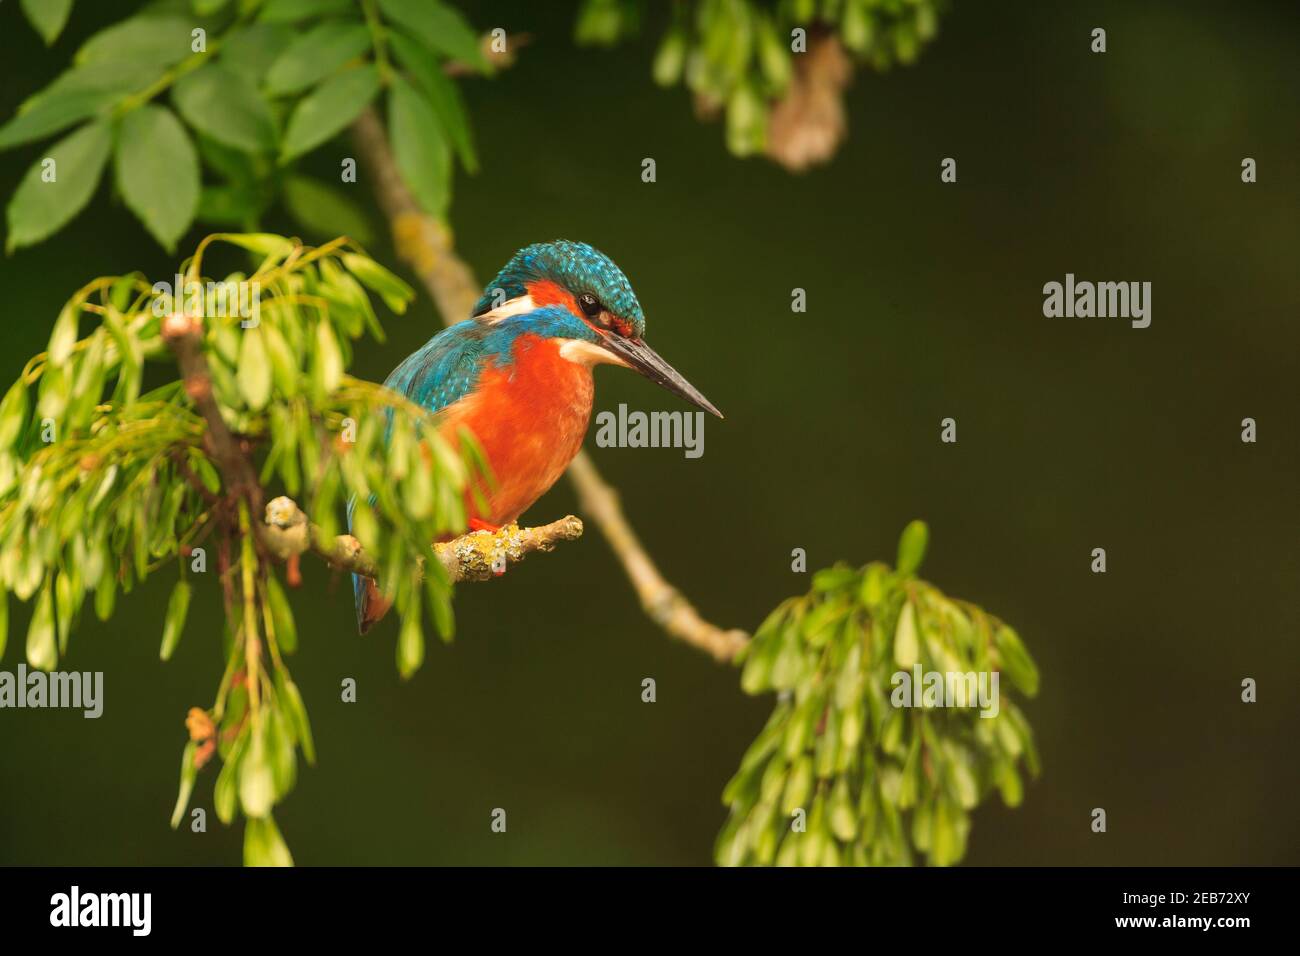 Kingfisher in their natural habitat. Stock Photo